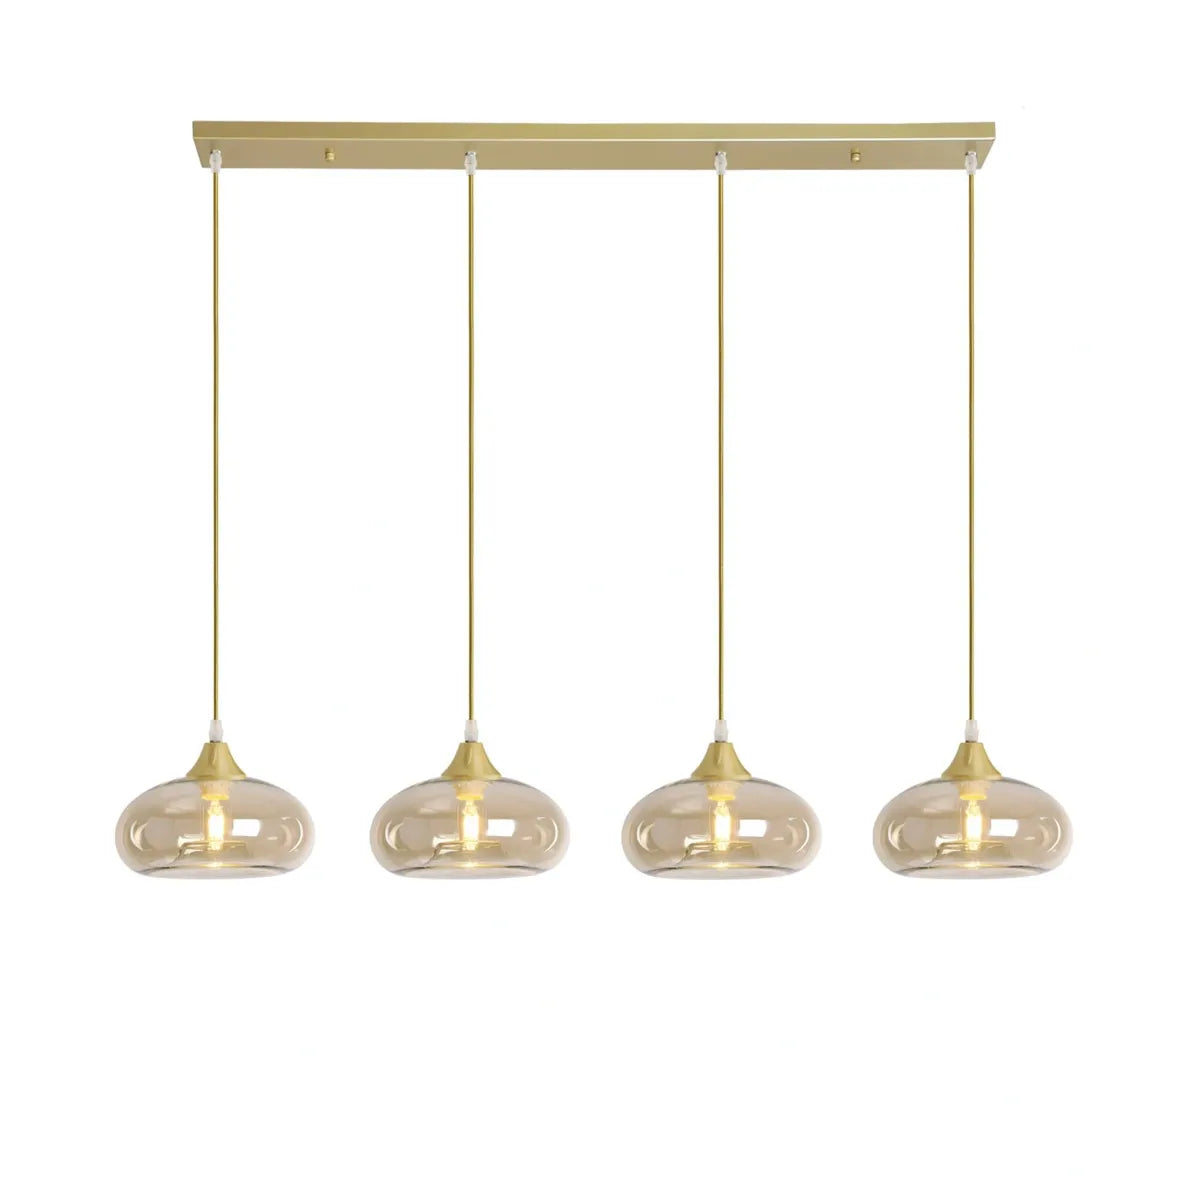 Murano 4 Light Gold Bar with Mushroom Glass shades